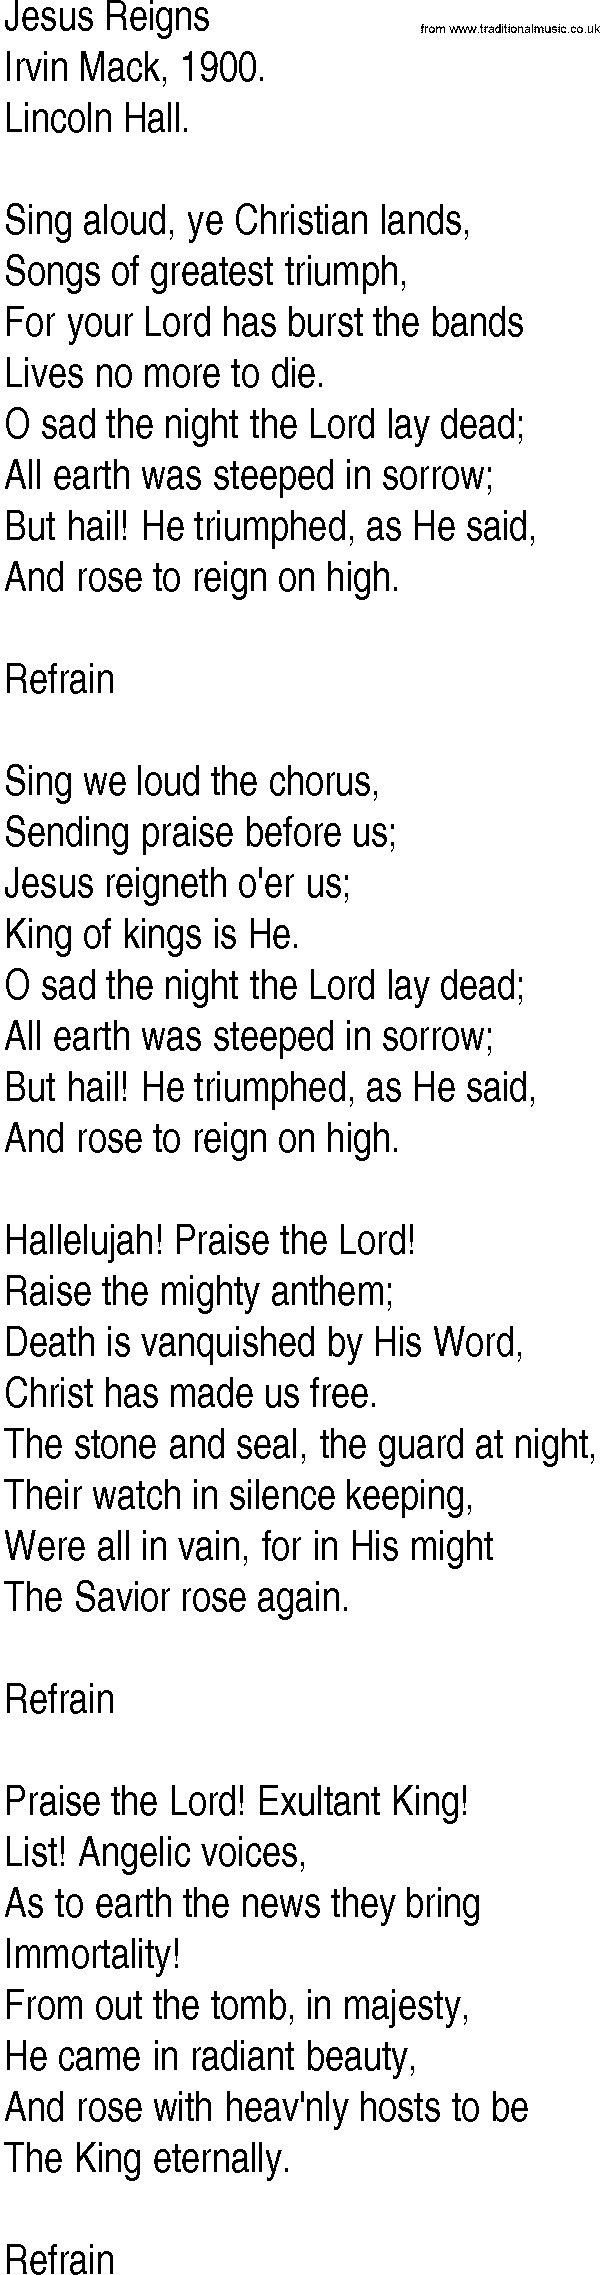 Hymn and Gospel Song: Jesus Reigns by Irvin Mack lyrics